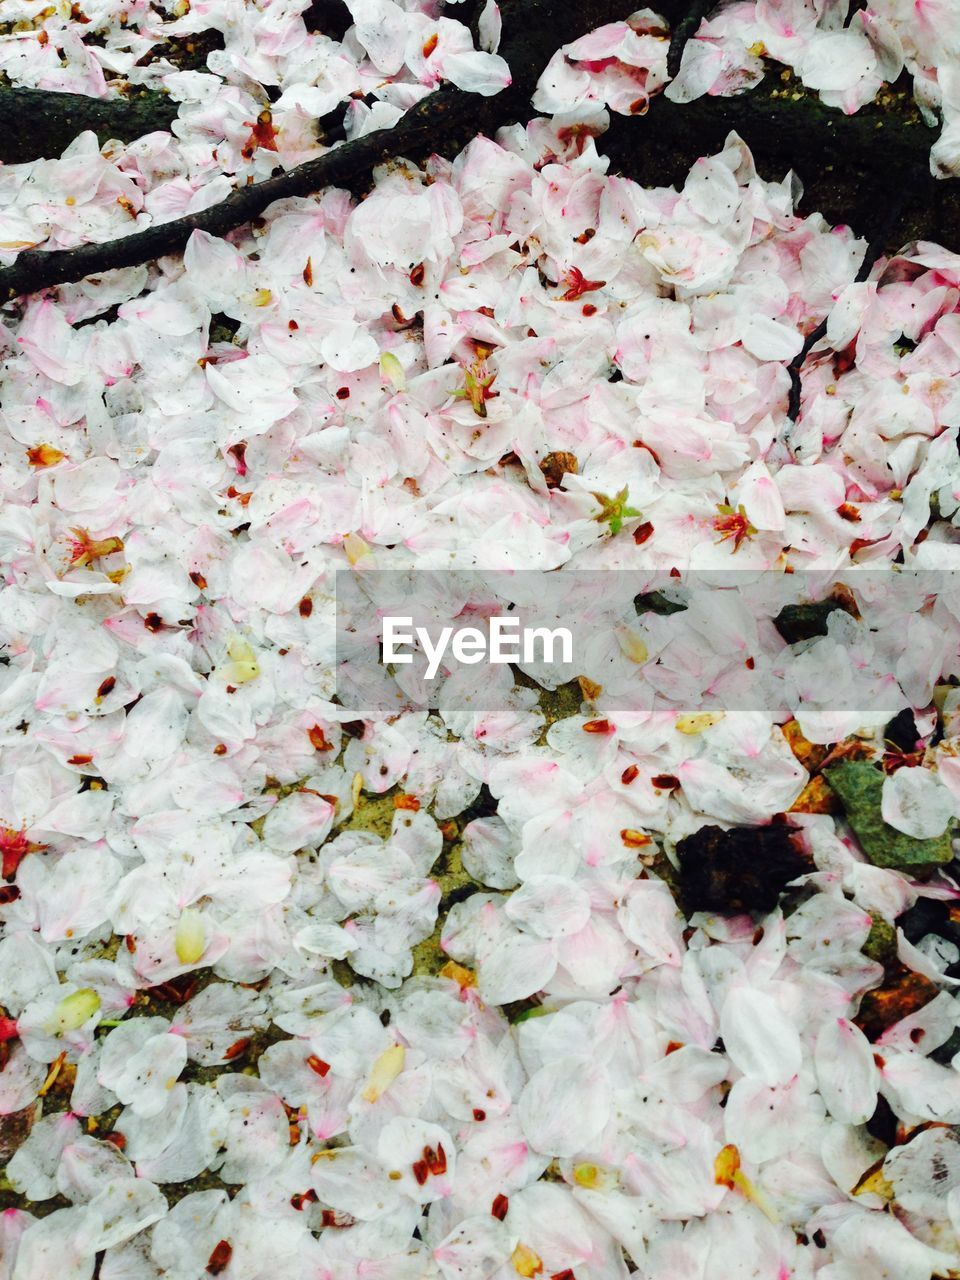 Full frame shot of petals on ground